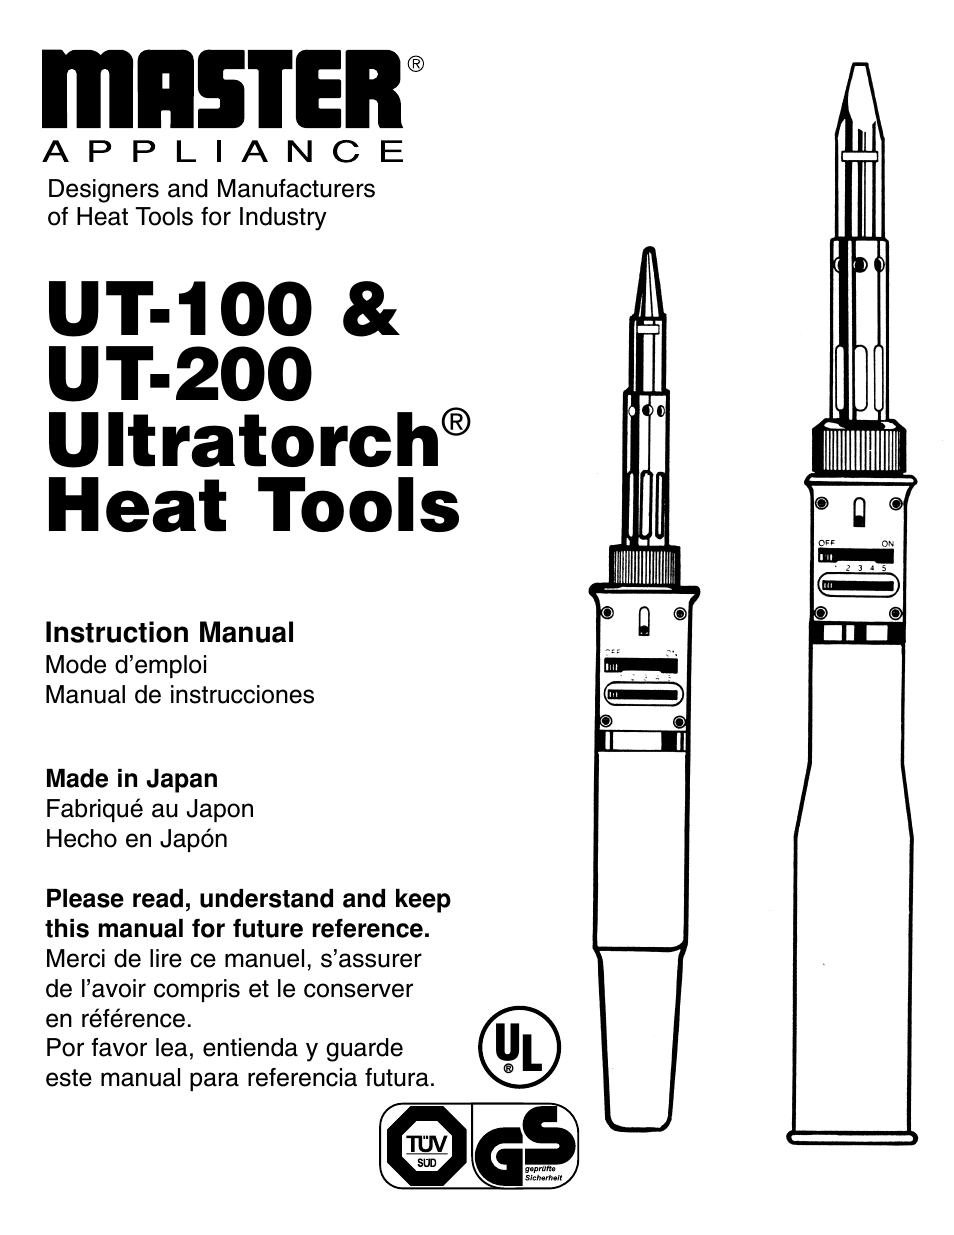 UT-200 Ultratorch Soldering Iron_Heat Tool